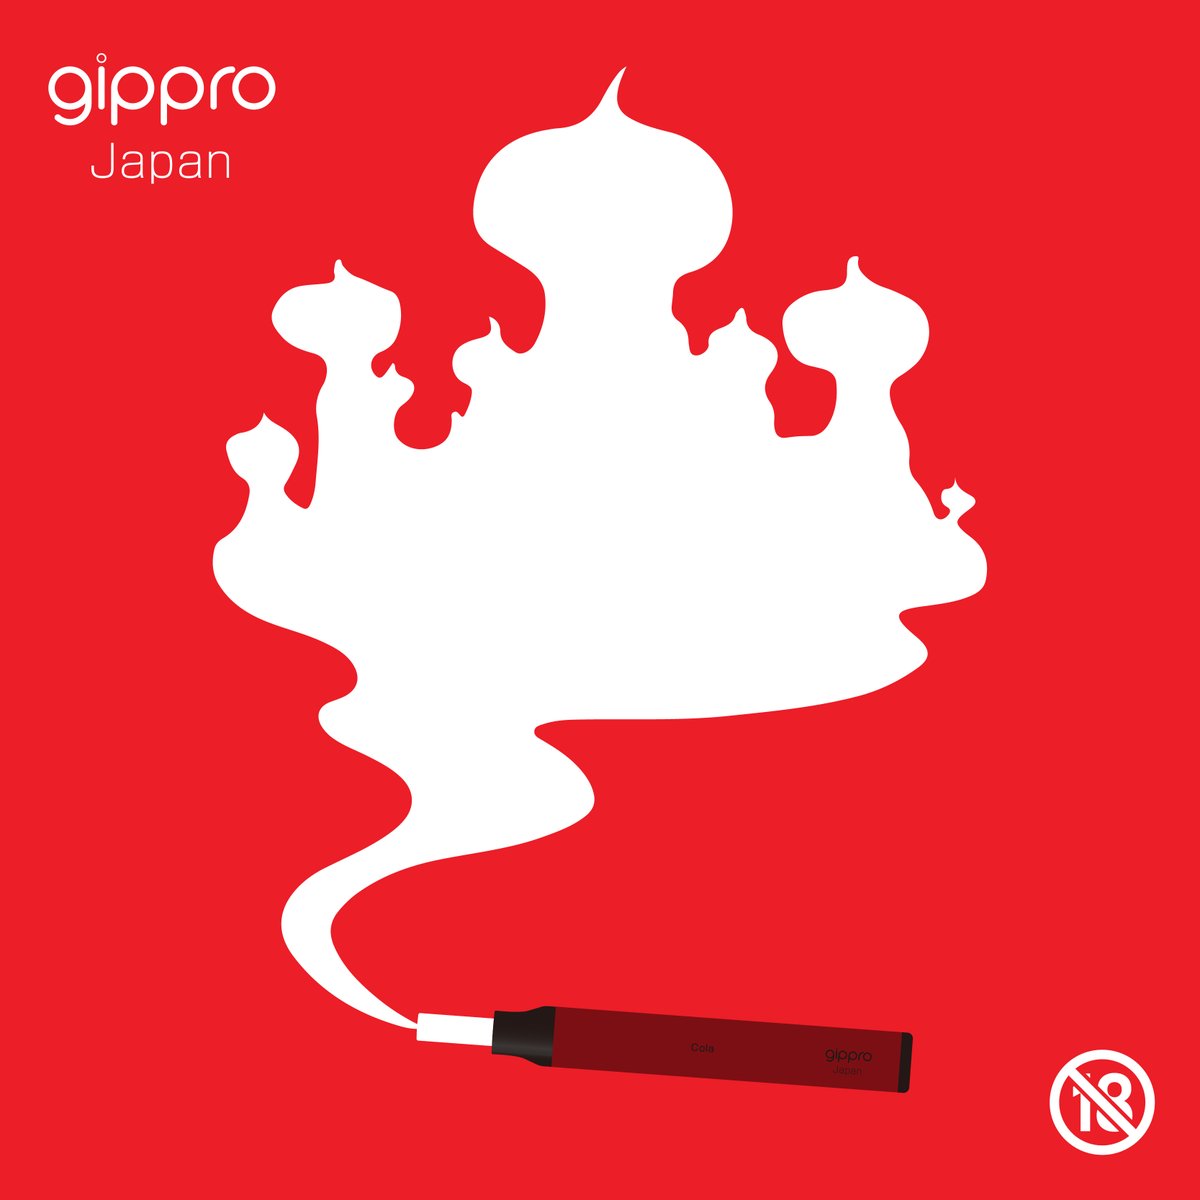 Hello, gippro family. Large vapor and battery capacity. Vape anywhere anytime.

#tobacco #vapedisposables #vapephotograpraphy #vaperussia #vapefam #vapepics #vaperussian #vapepower #vapeuk